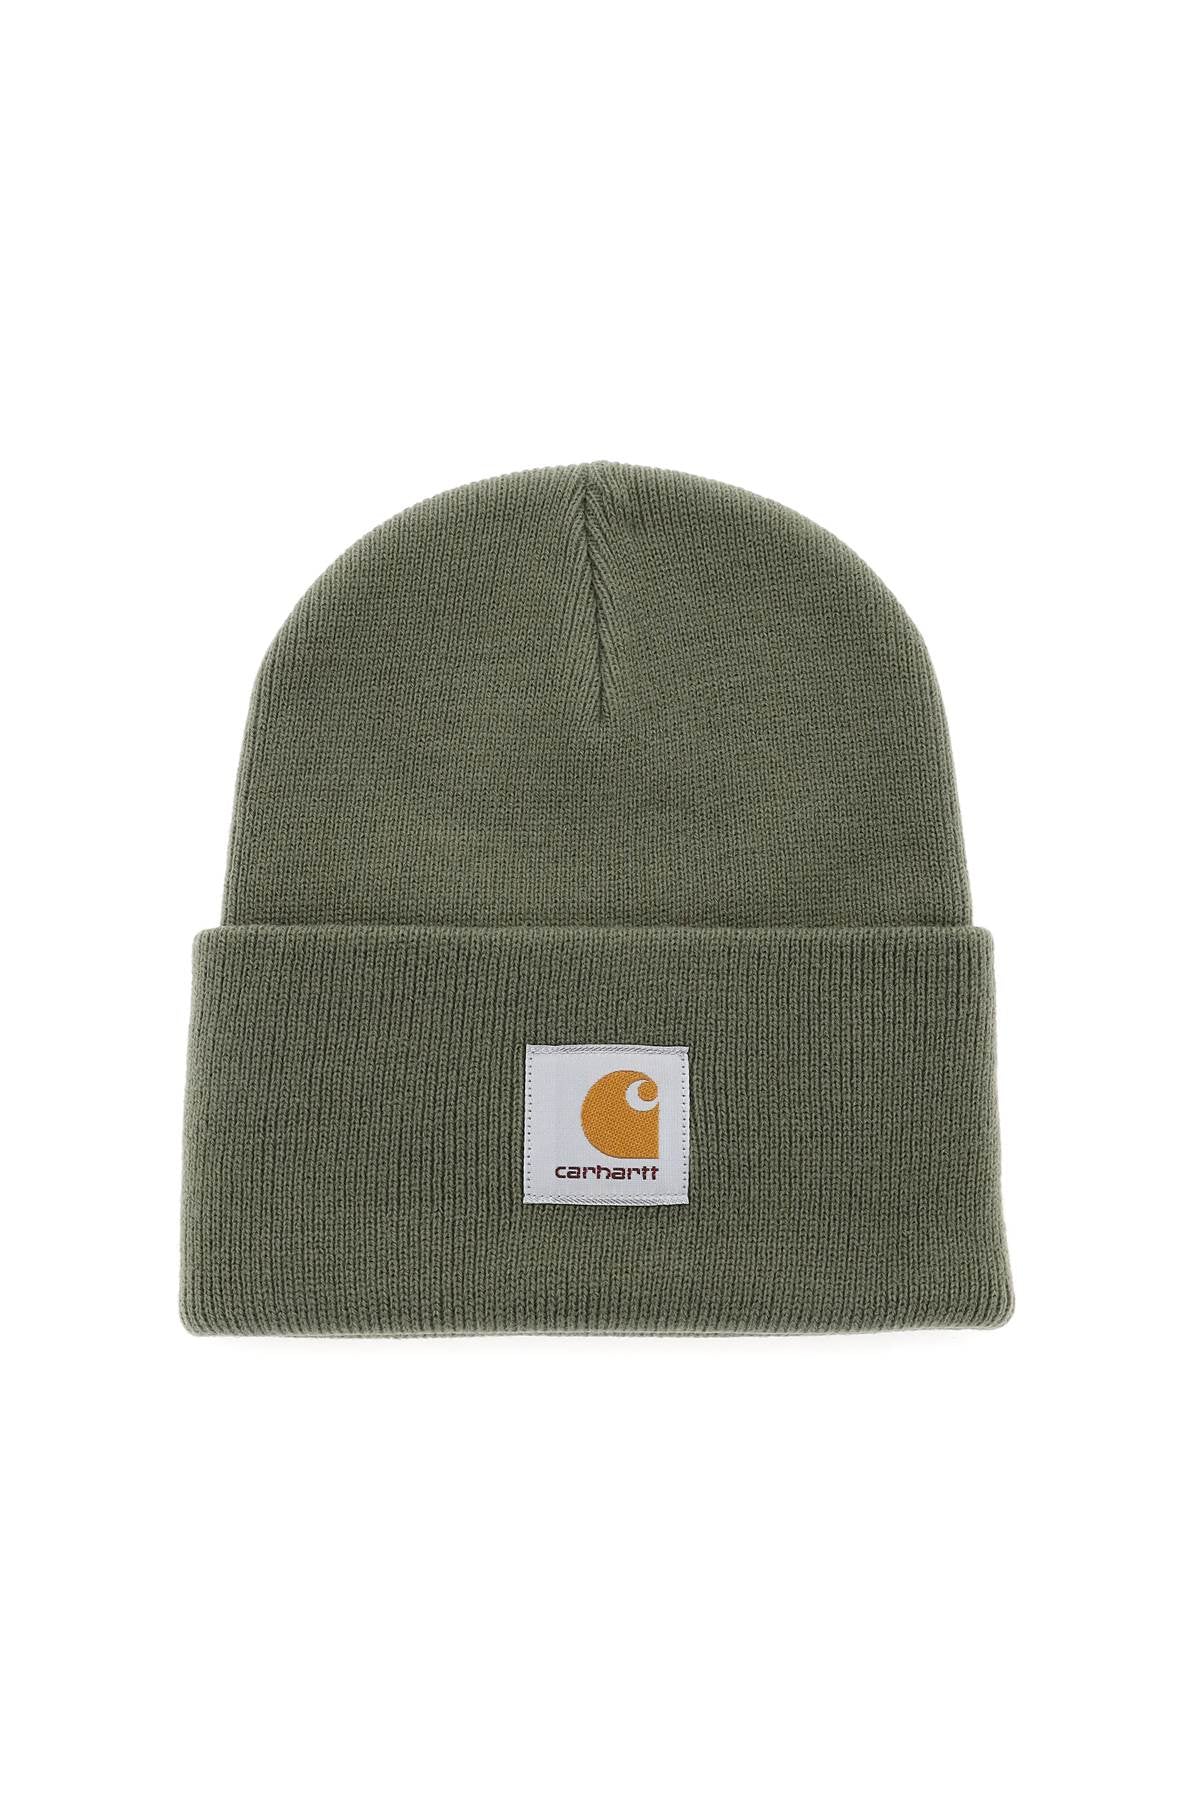 Carhartt Wip Beanie Hat With Logo Patch-Carhartt Wip-Urbanheer